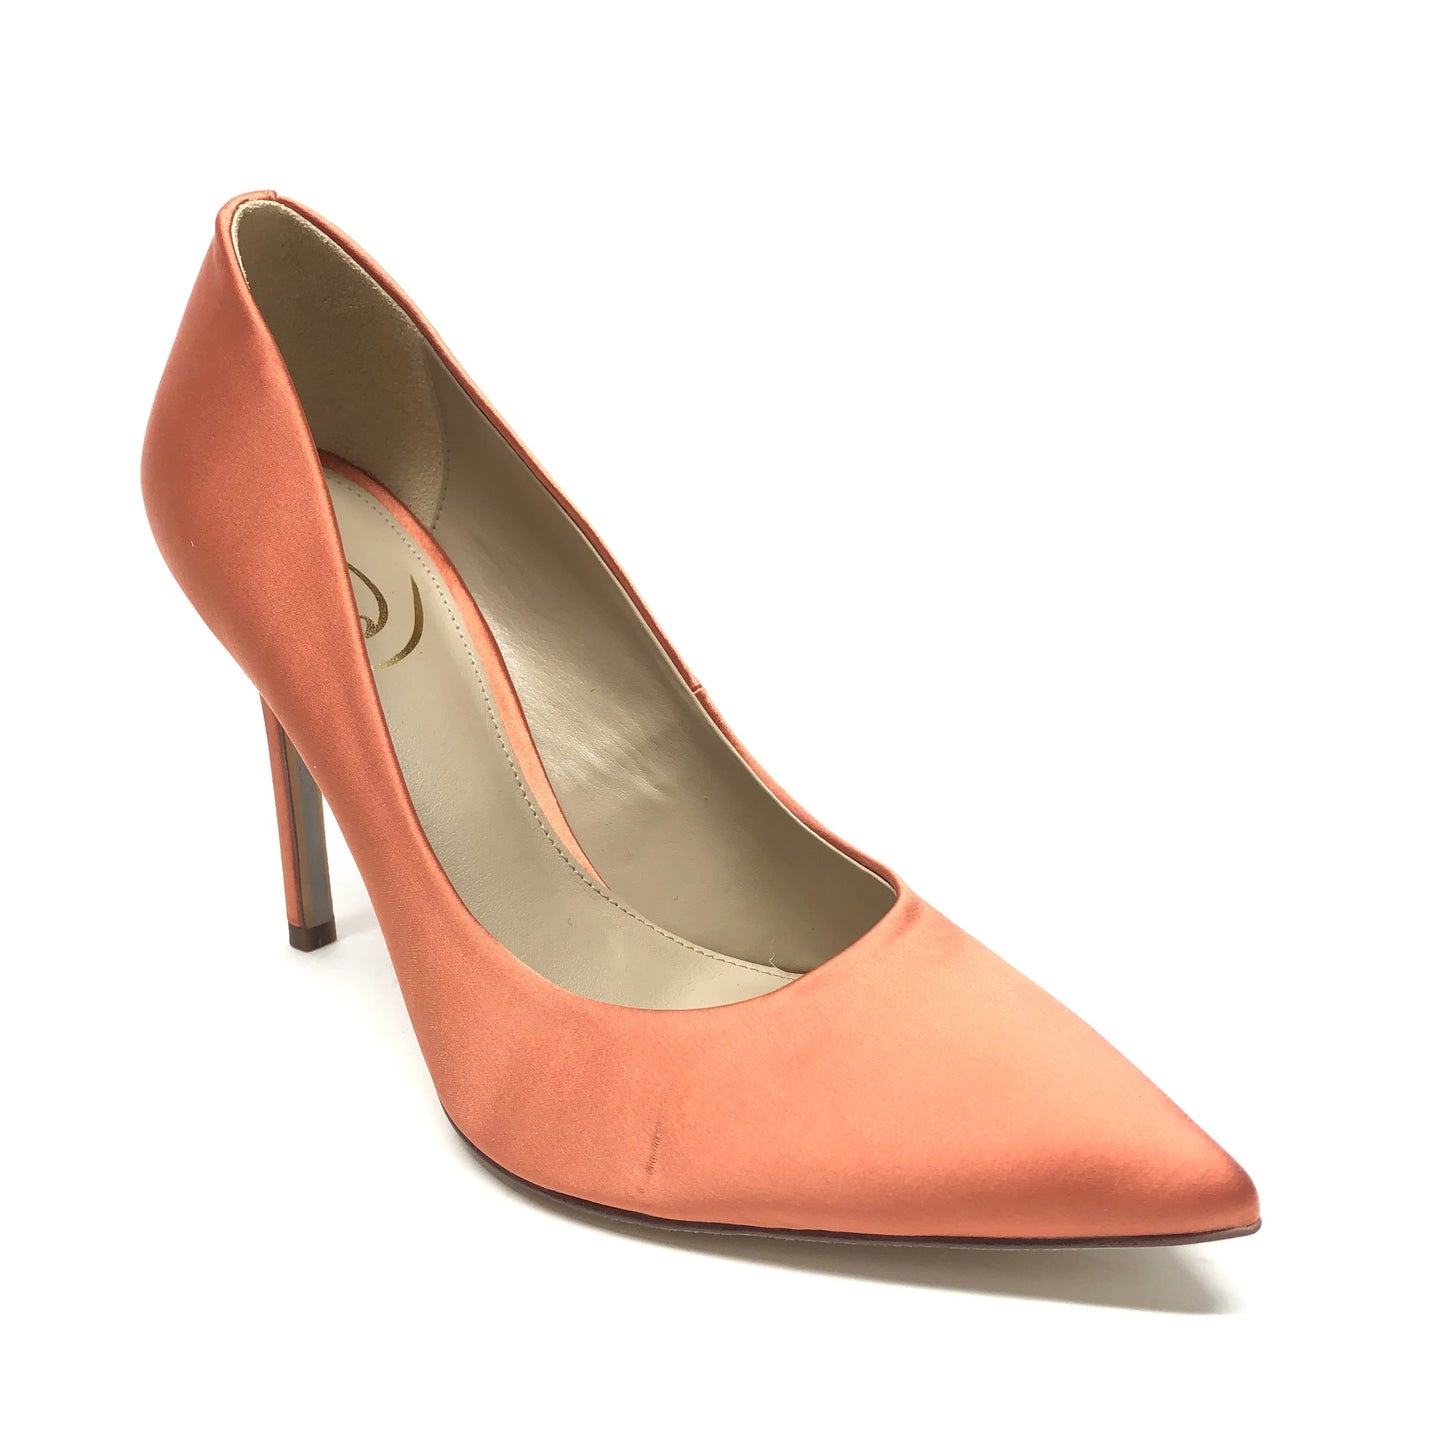 Orange Shoes Heels Stiletto Sam Edelman, Size 7.5